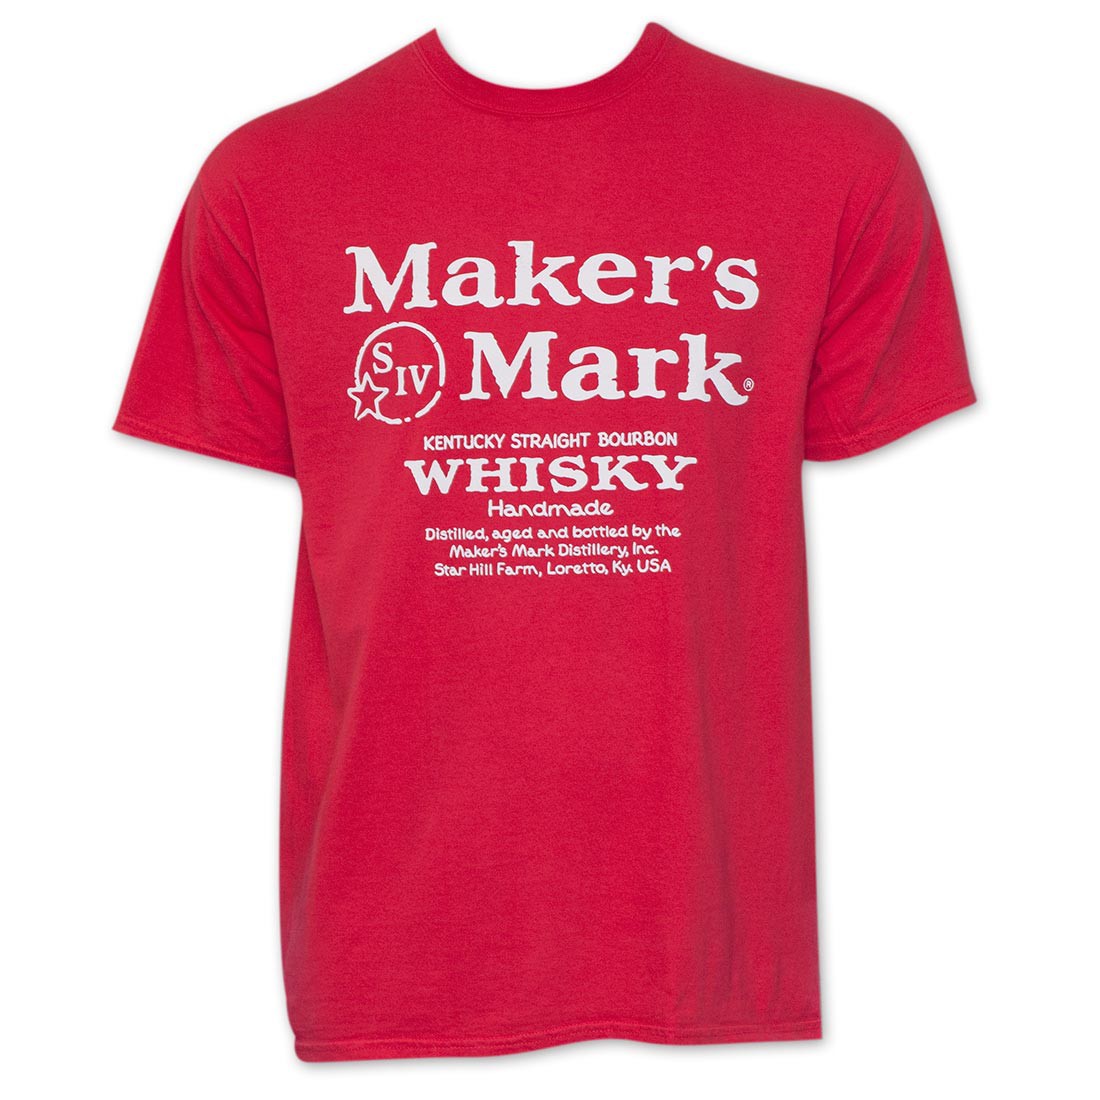 OWANAC Man T Shirt Makers Mark Whiskey Logo Pattern Funny Cotton Summer Short Sleeve T Shirts 